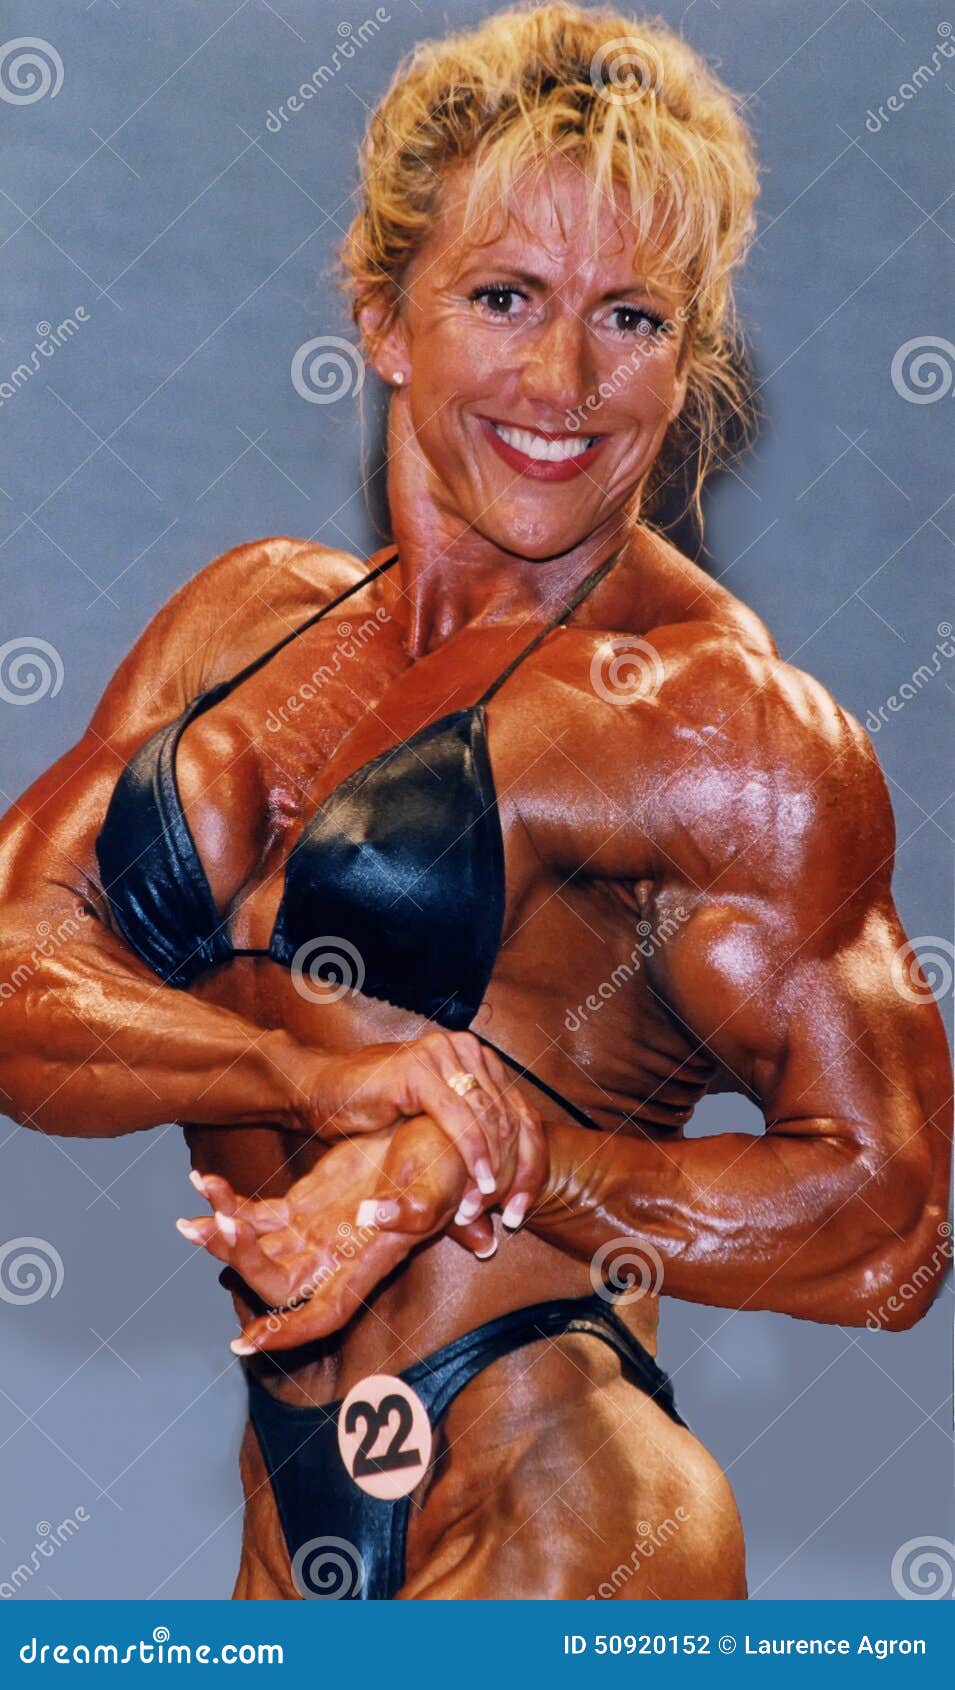 Women bodybuilder tits